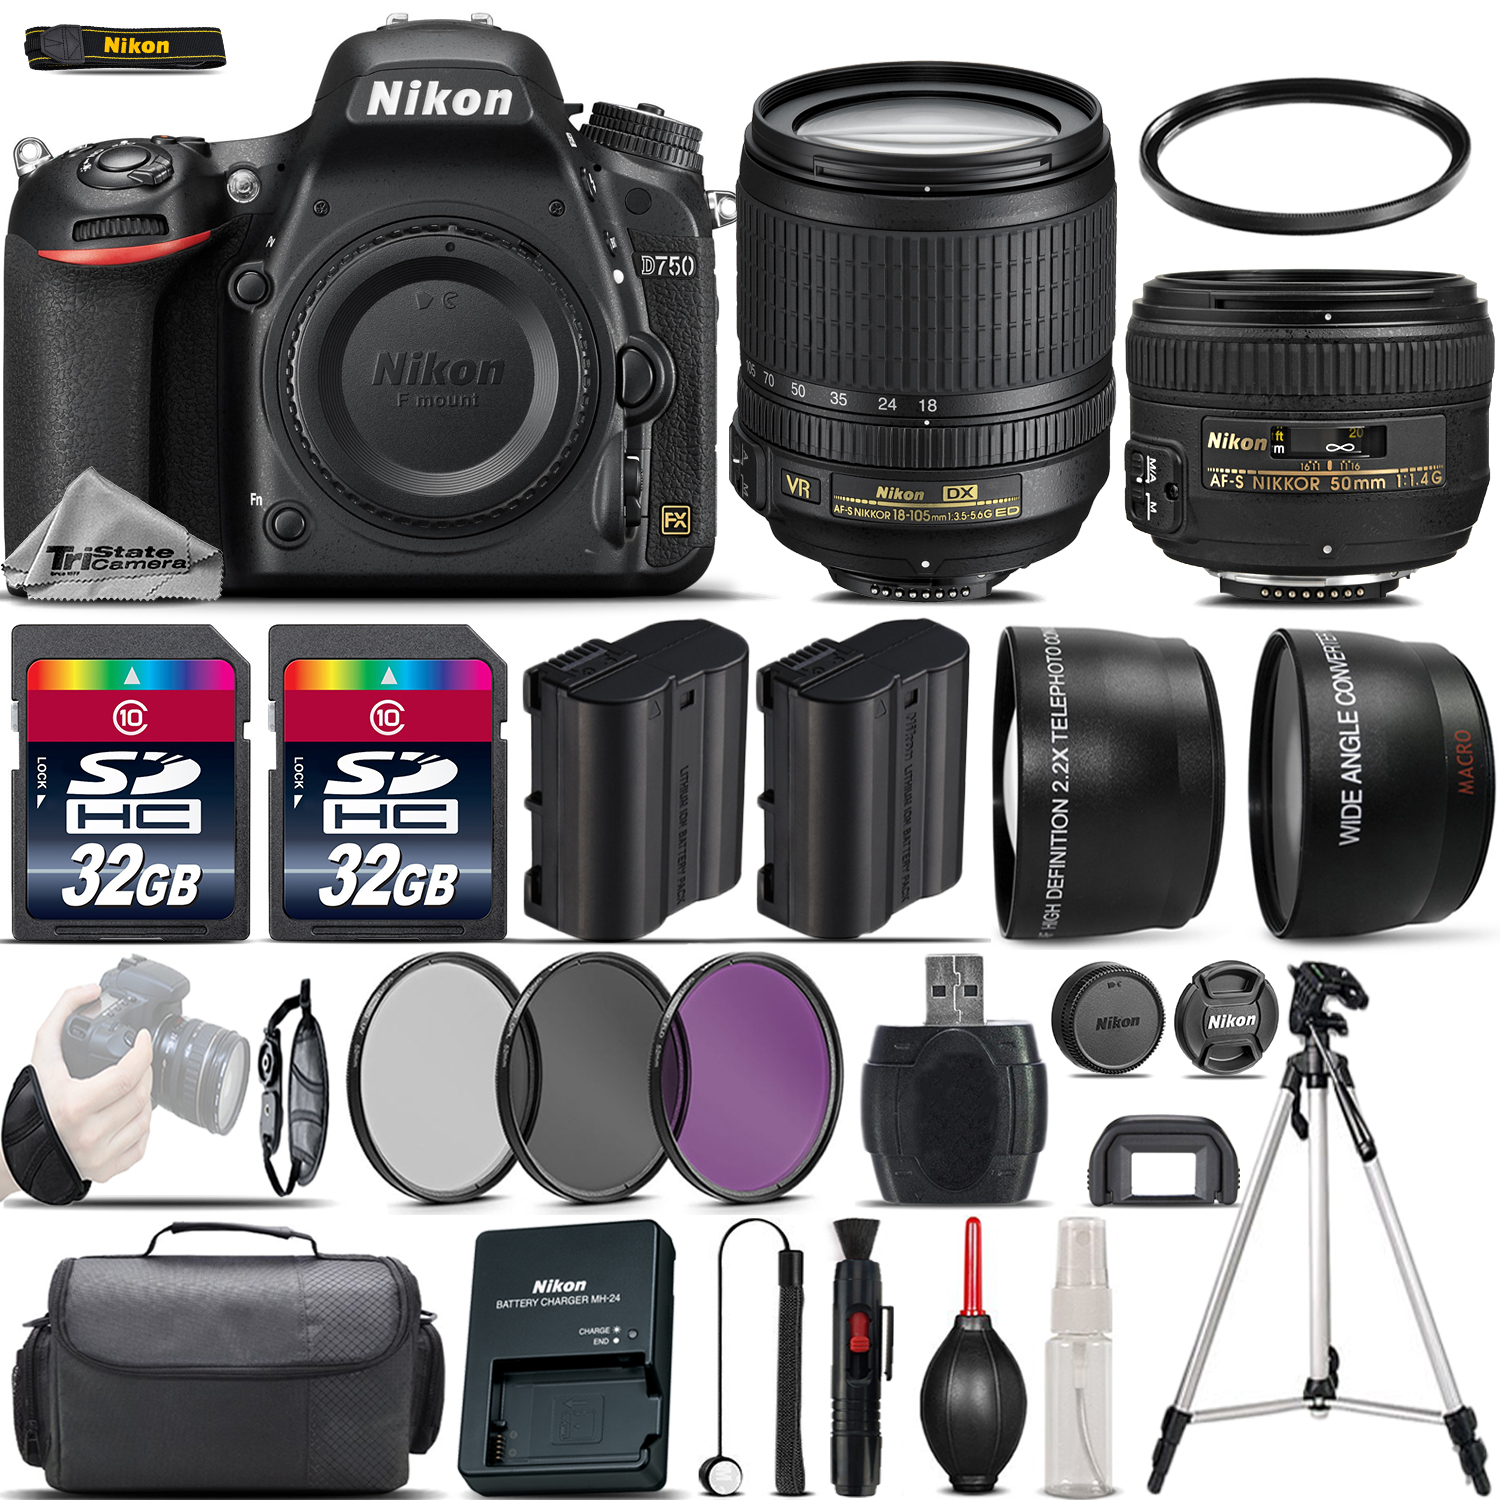 D750 Digital SLR Camera + 18-105mm VR + 50mm 1.4G Lens + 64GB -4 Lens Kit *FREE SHIPPING*